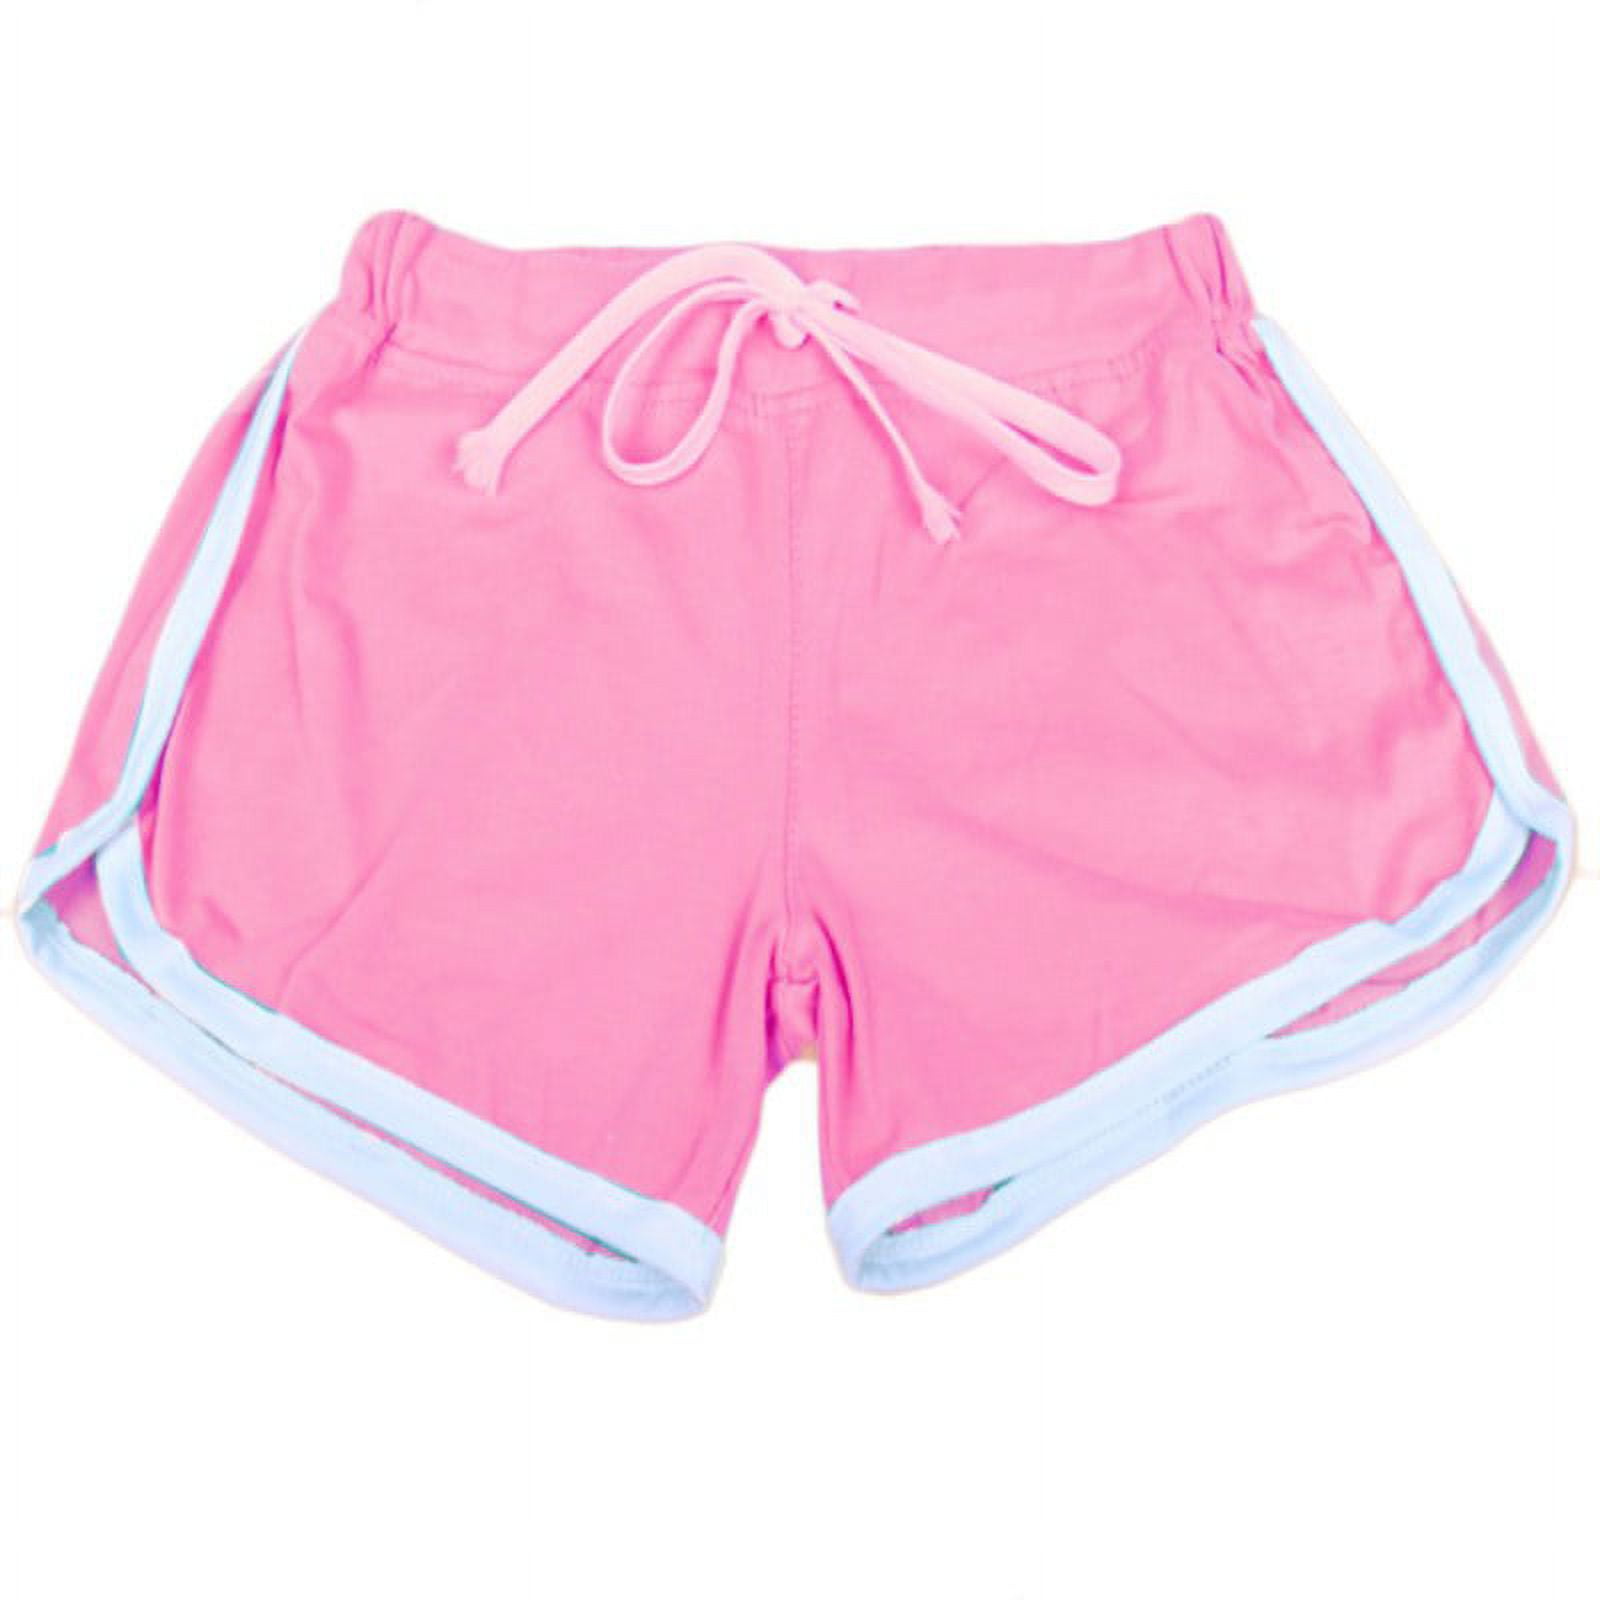 Shorts for Women, Women'S Lightweight Summer Casual Elastic Waist Baseball  Print Shorts Baggy Comfy Beach Shorts Womens Clearance Sale Under 15 Dollar  Items #2 